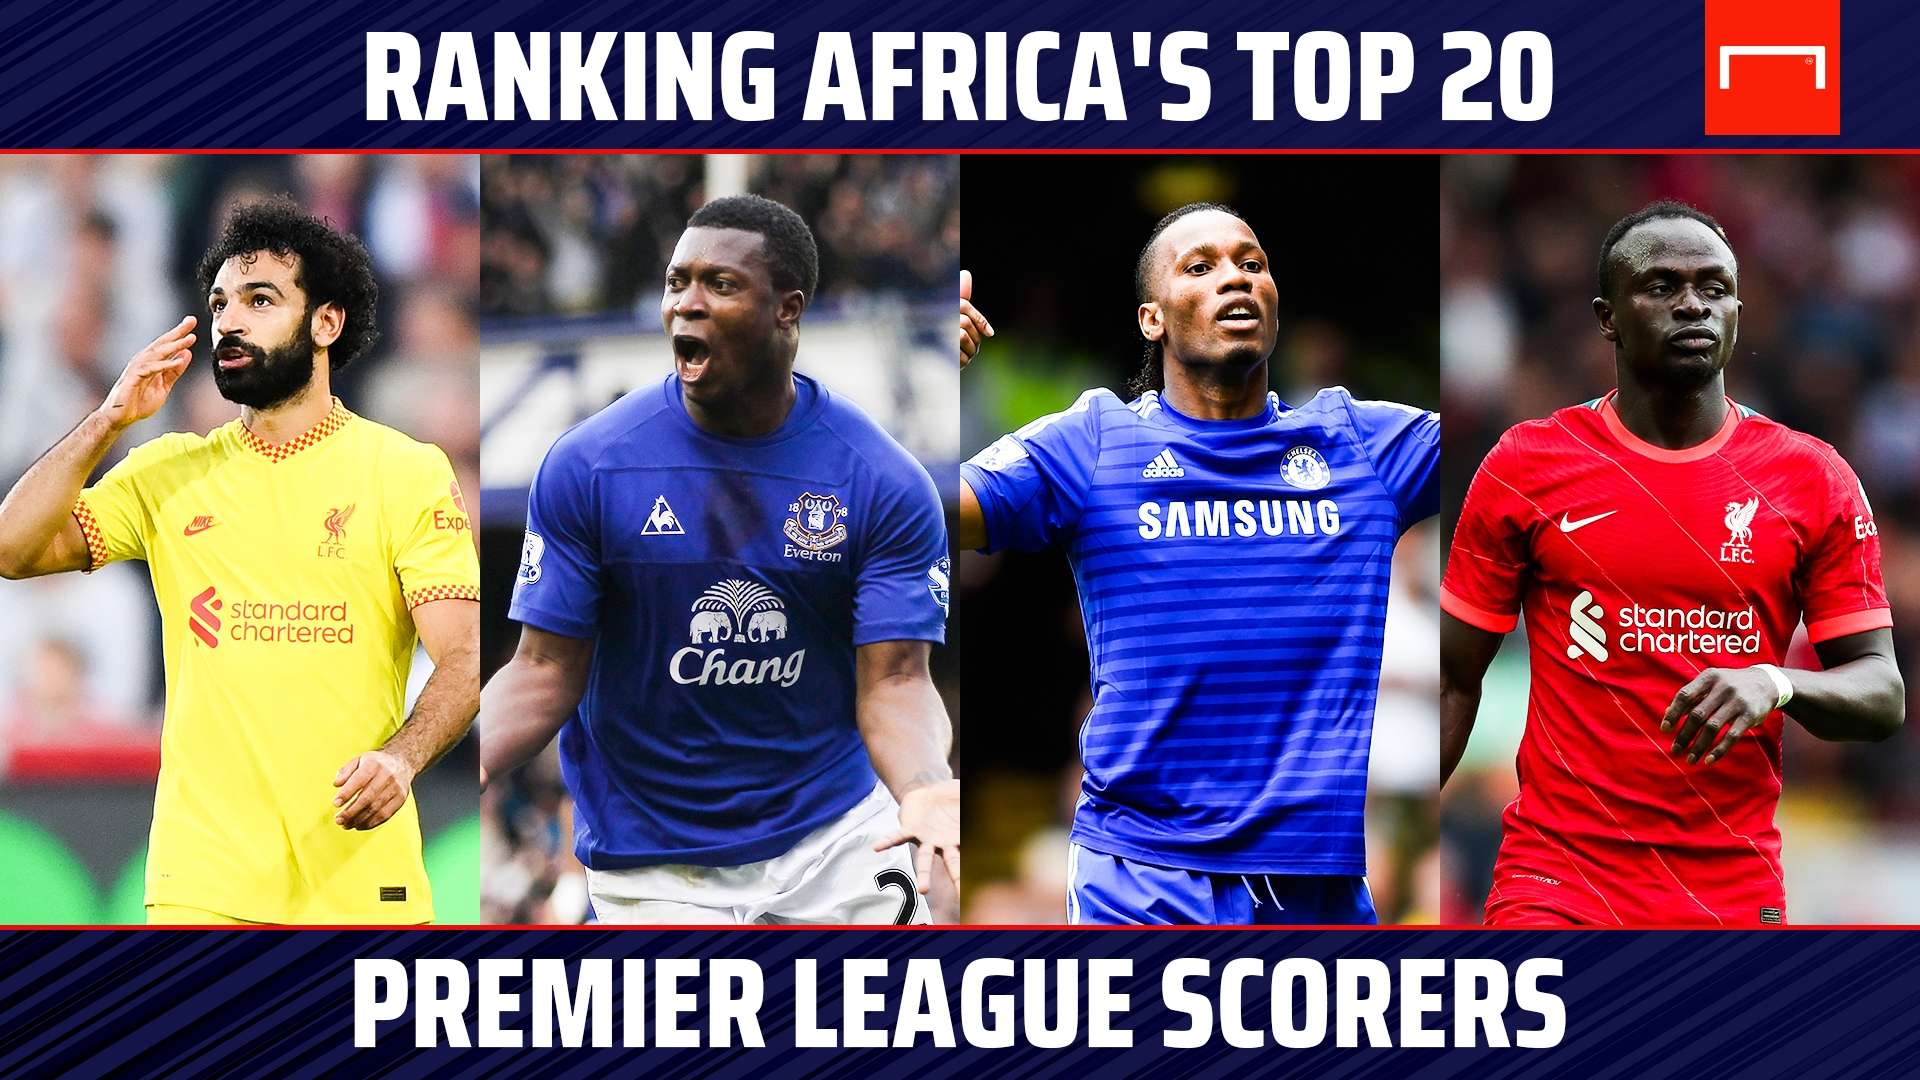 Ranking Africa's top 20 Premier League scorers